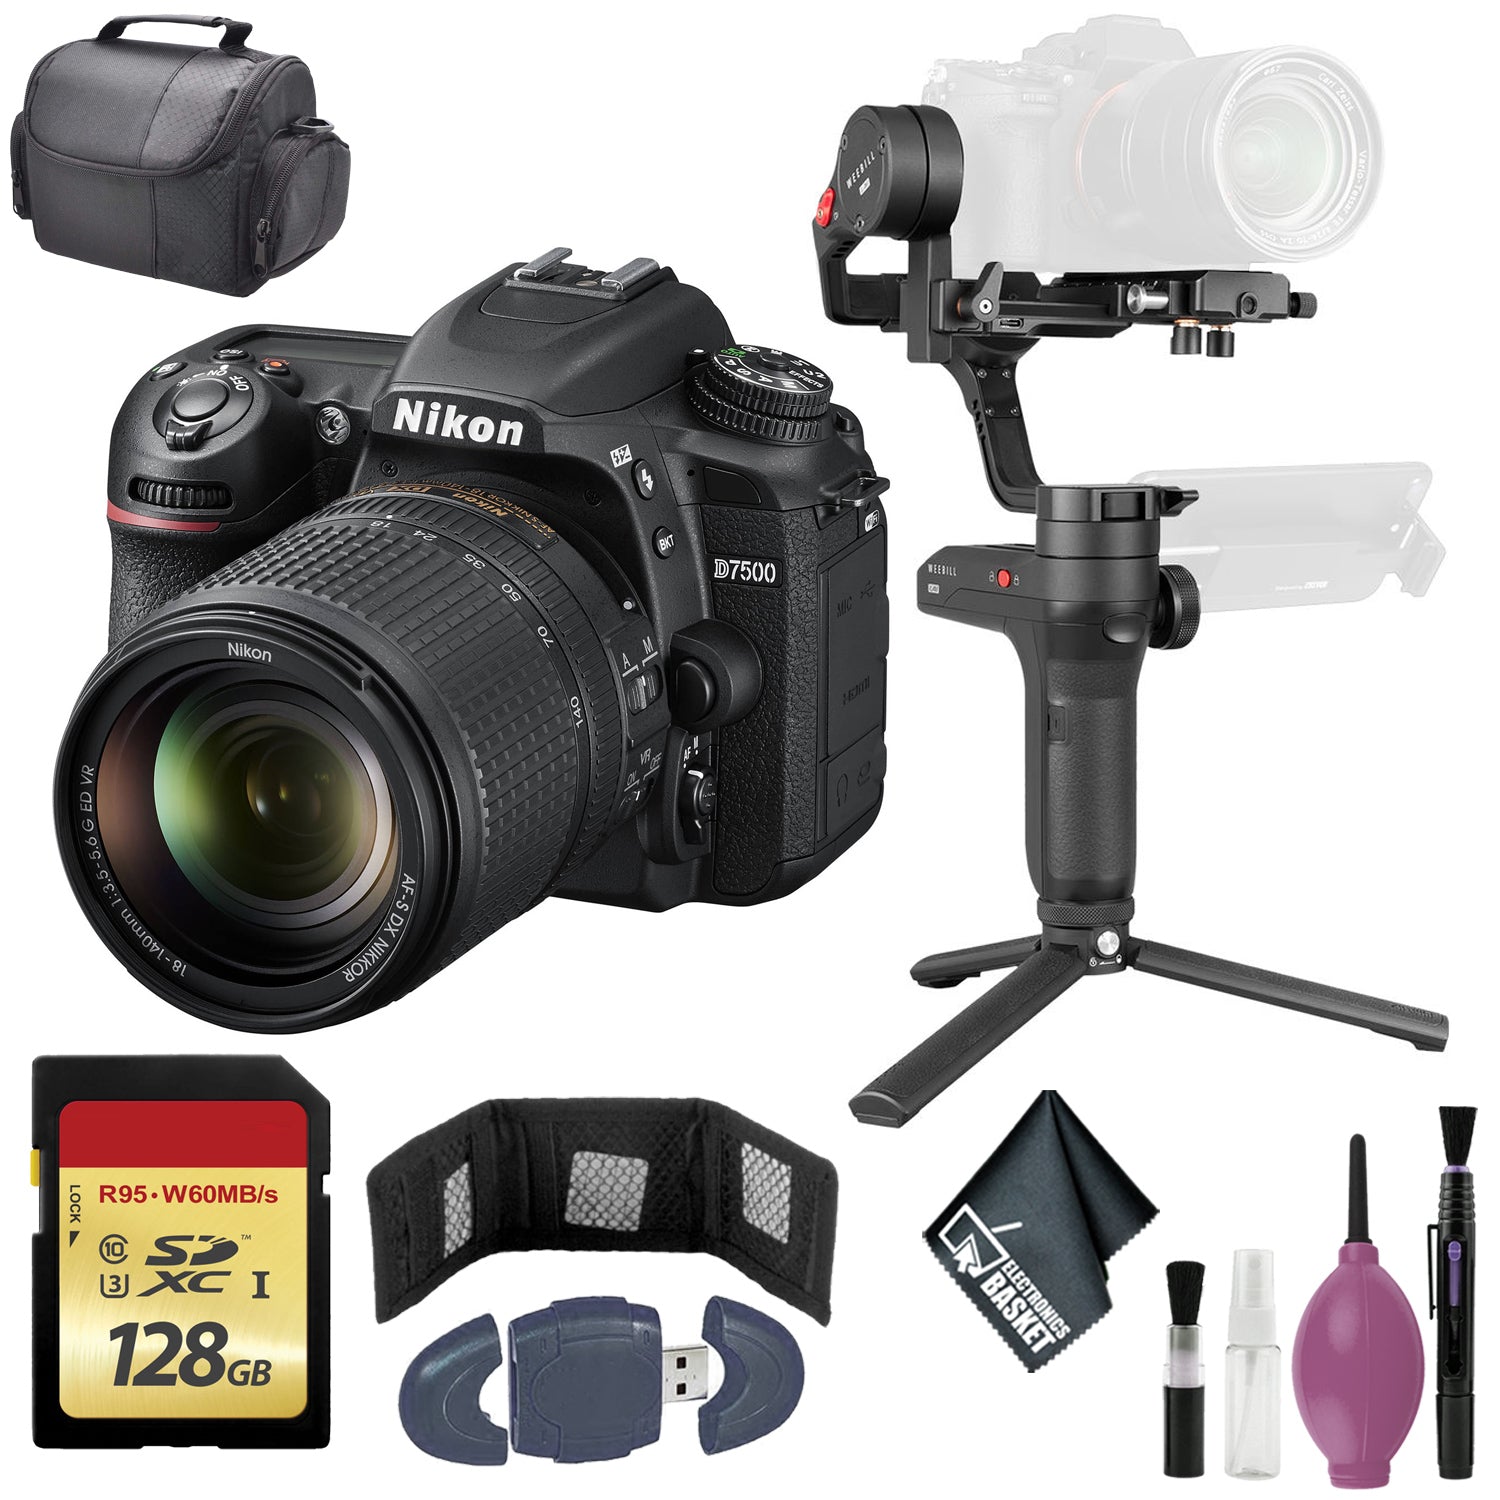 Zhiyun-Tech WEEBILL LAB Handheld Stabilizer - Nikon D7500 DSLR Camera with 18-140mm Lens - 128GB Case